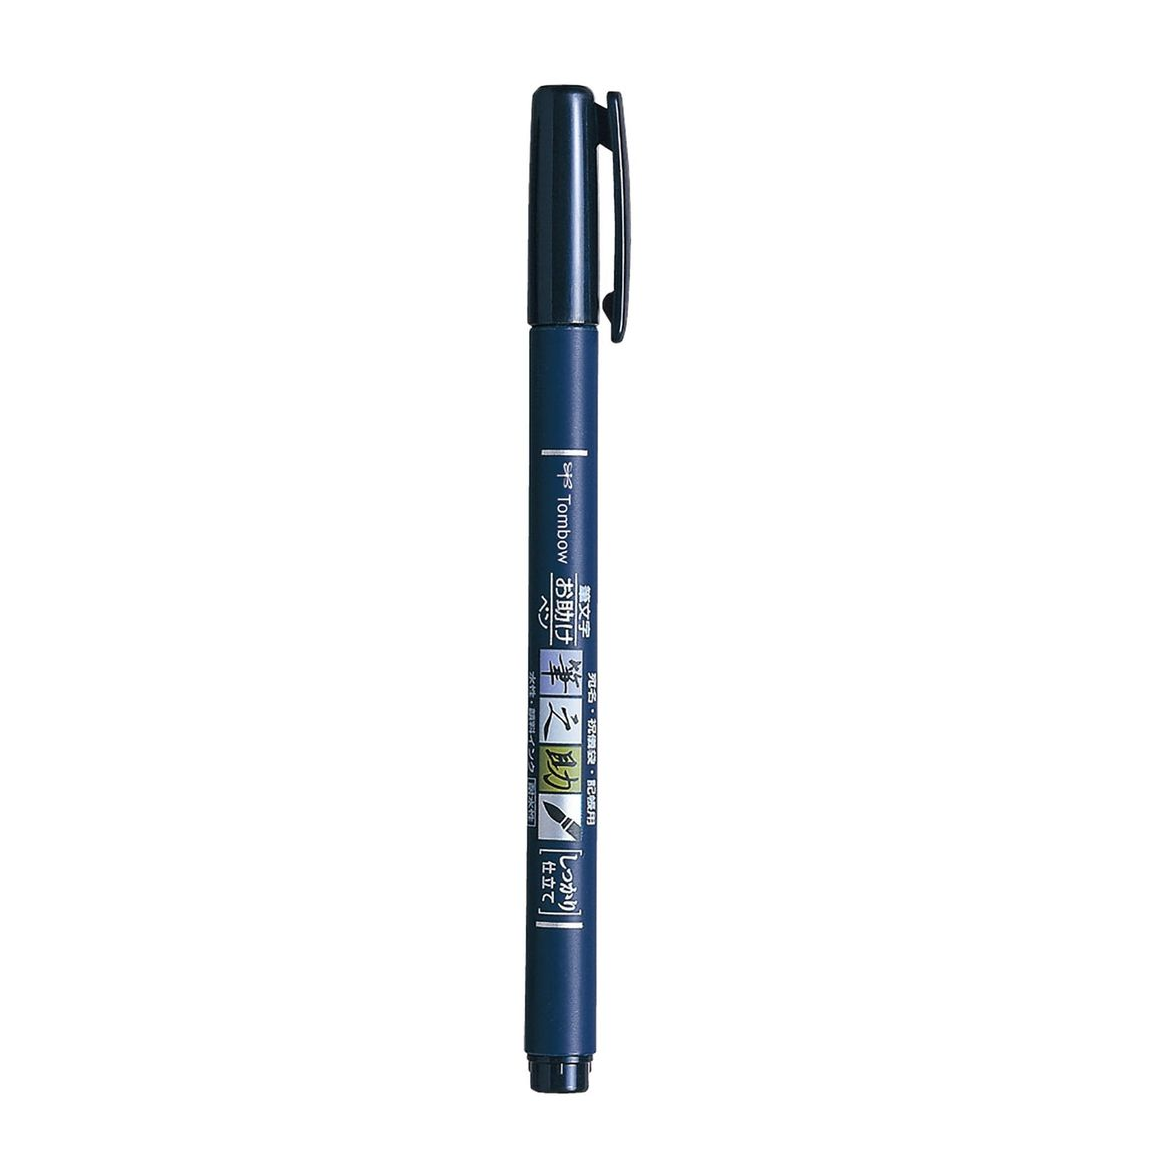 Tombow Fudenosuke Brush Pen - Hard Tip - Japanese Kawaii Pen Shop